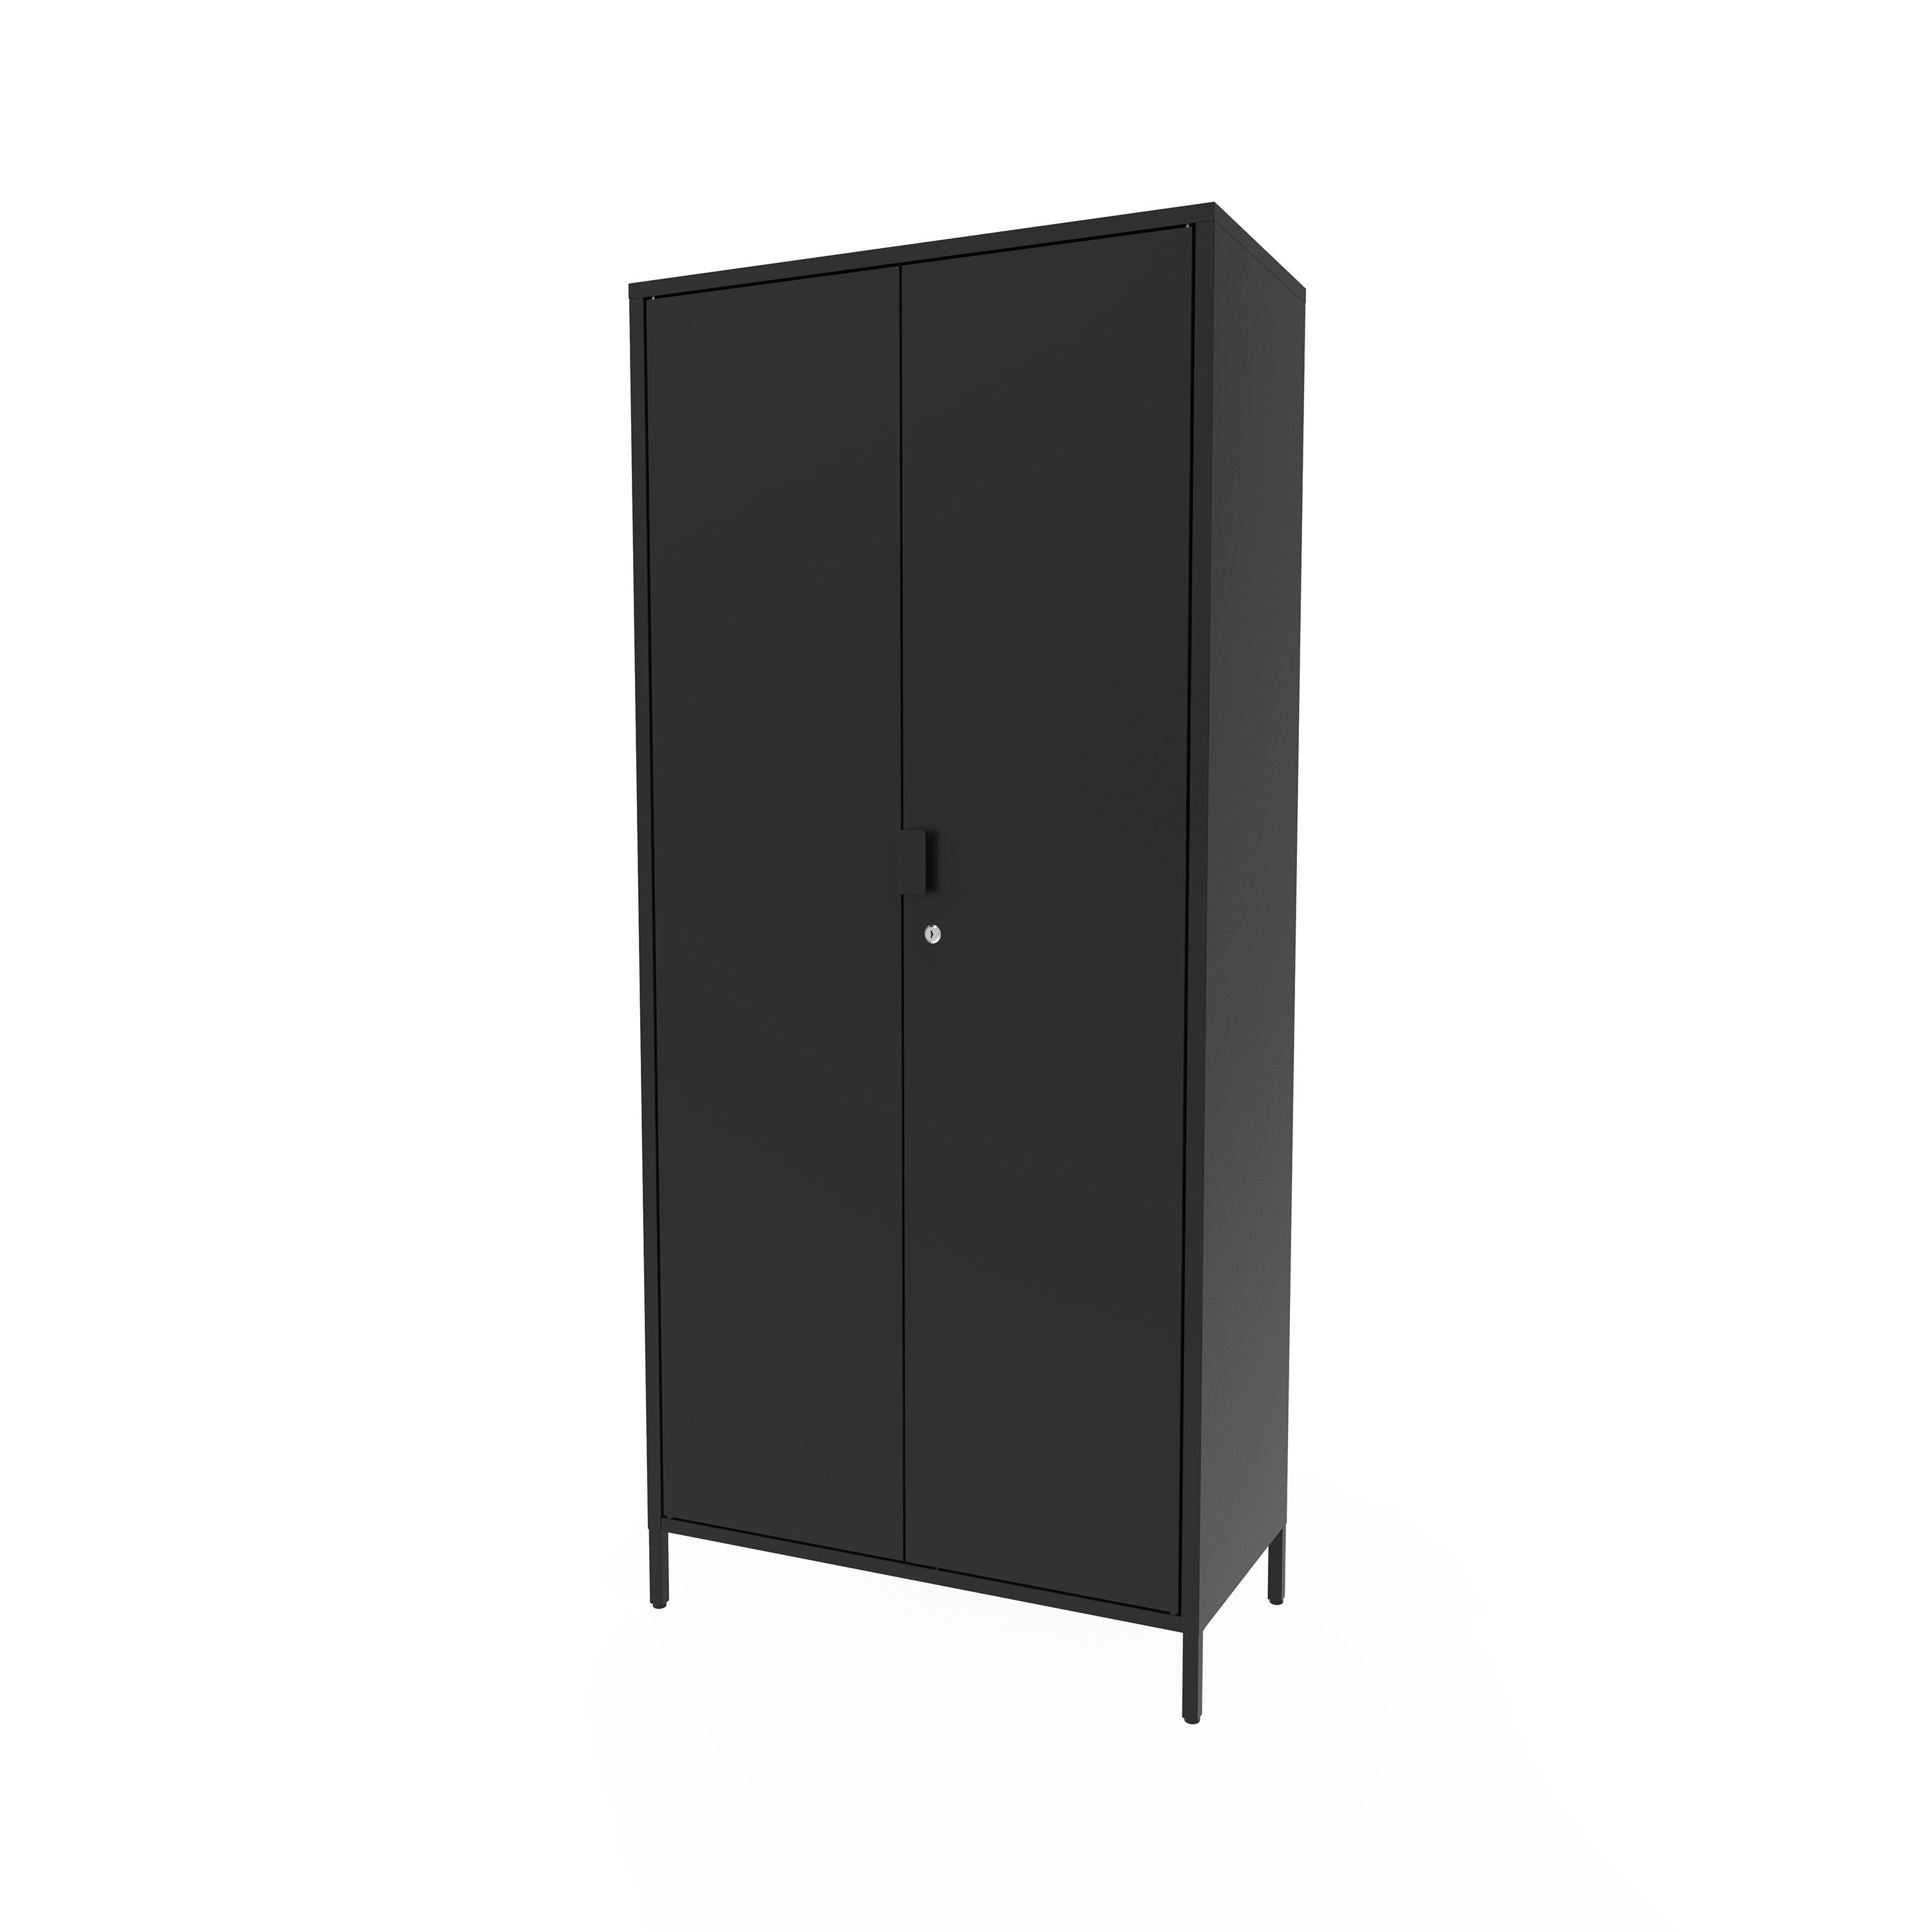 GoodHome Rand 4 shelf Black Steel Tall Utility High storage cabinet